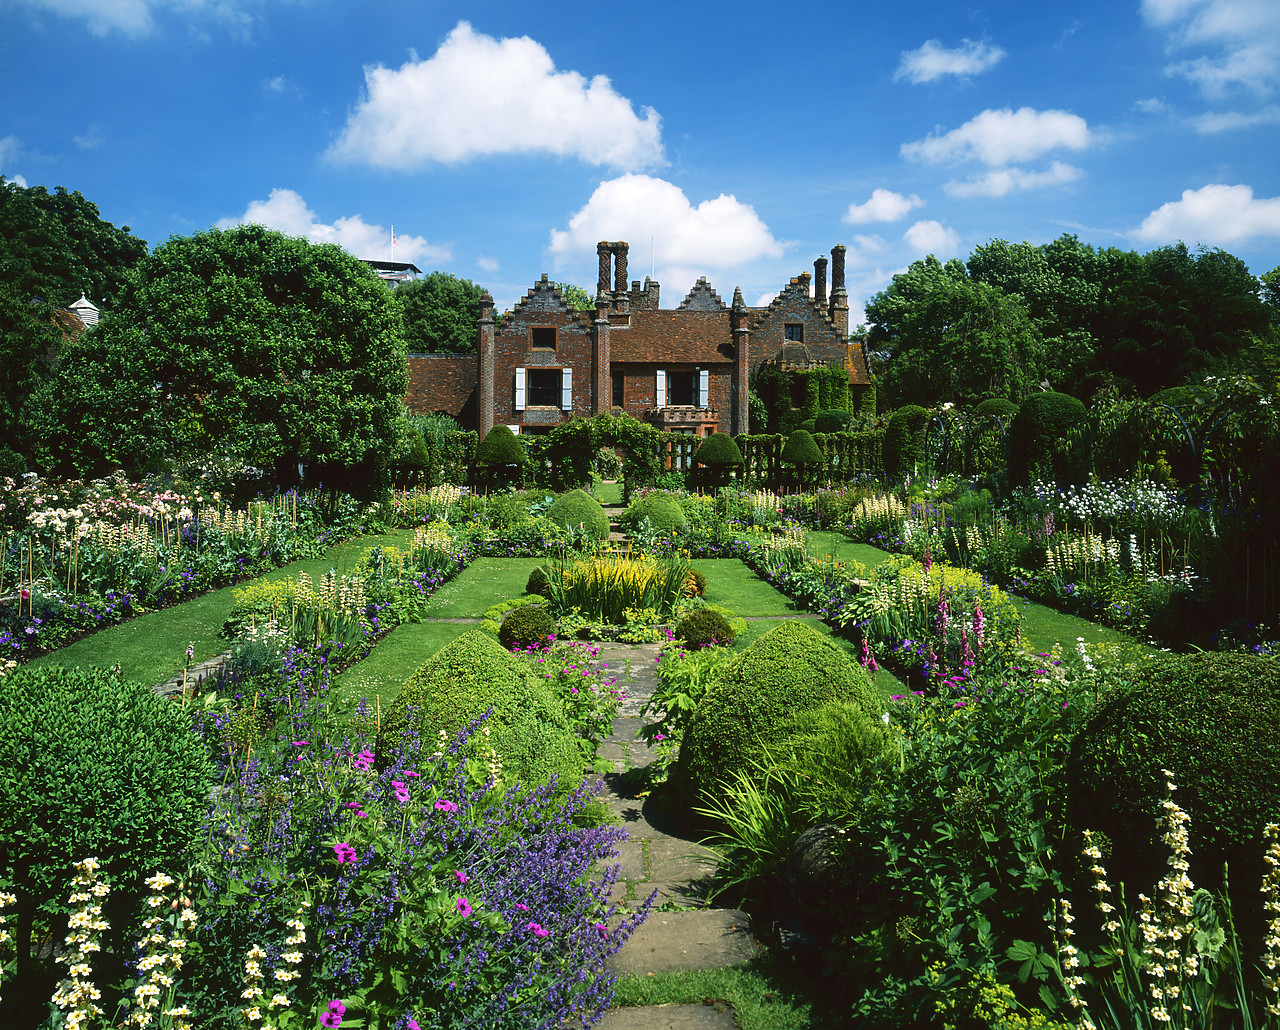 #040163-1 - Chenies Manor Garden, Chenies, Buckinghamshire, England